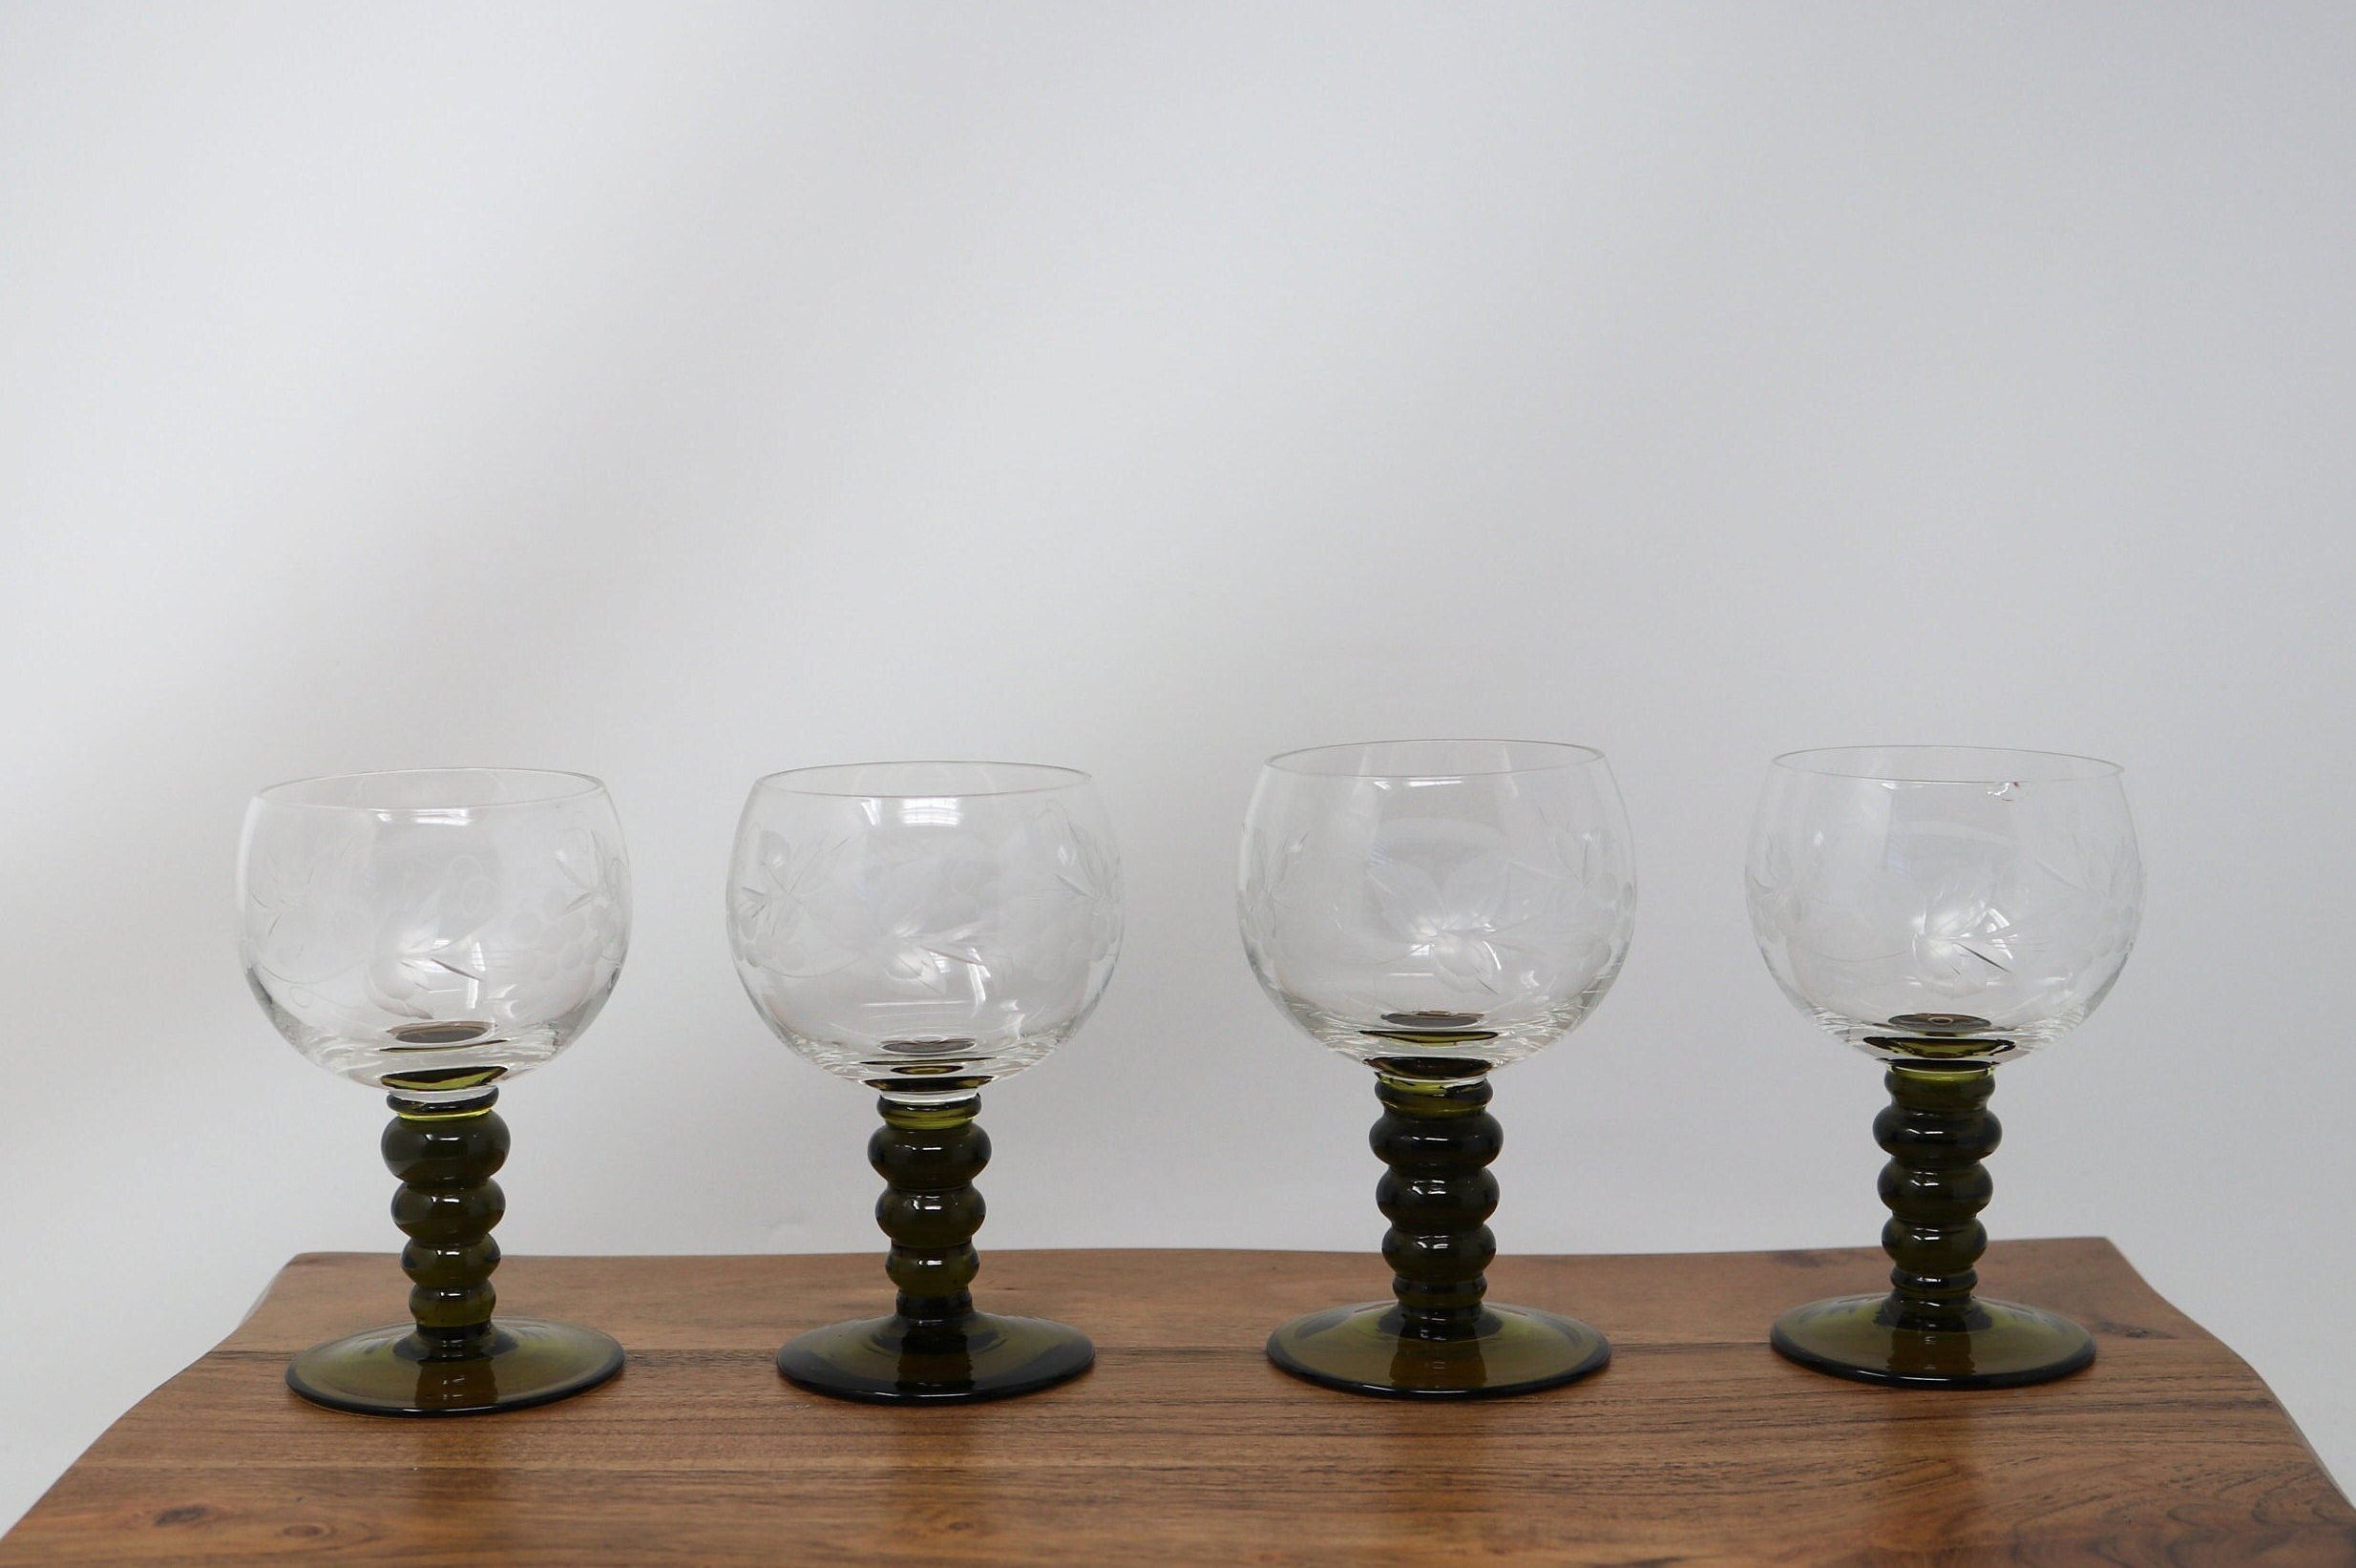 Roshtia 12 Pieces Green Wine Glasses 11.8 oz Vintage Embossed Leaf Pattern  Water Goblets Dishwasher …See more Roshtia 12 Pieces Green Wine Glasses